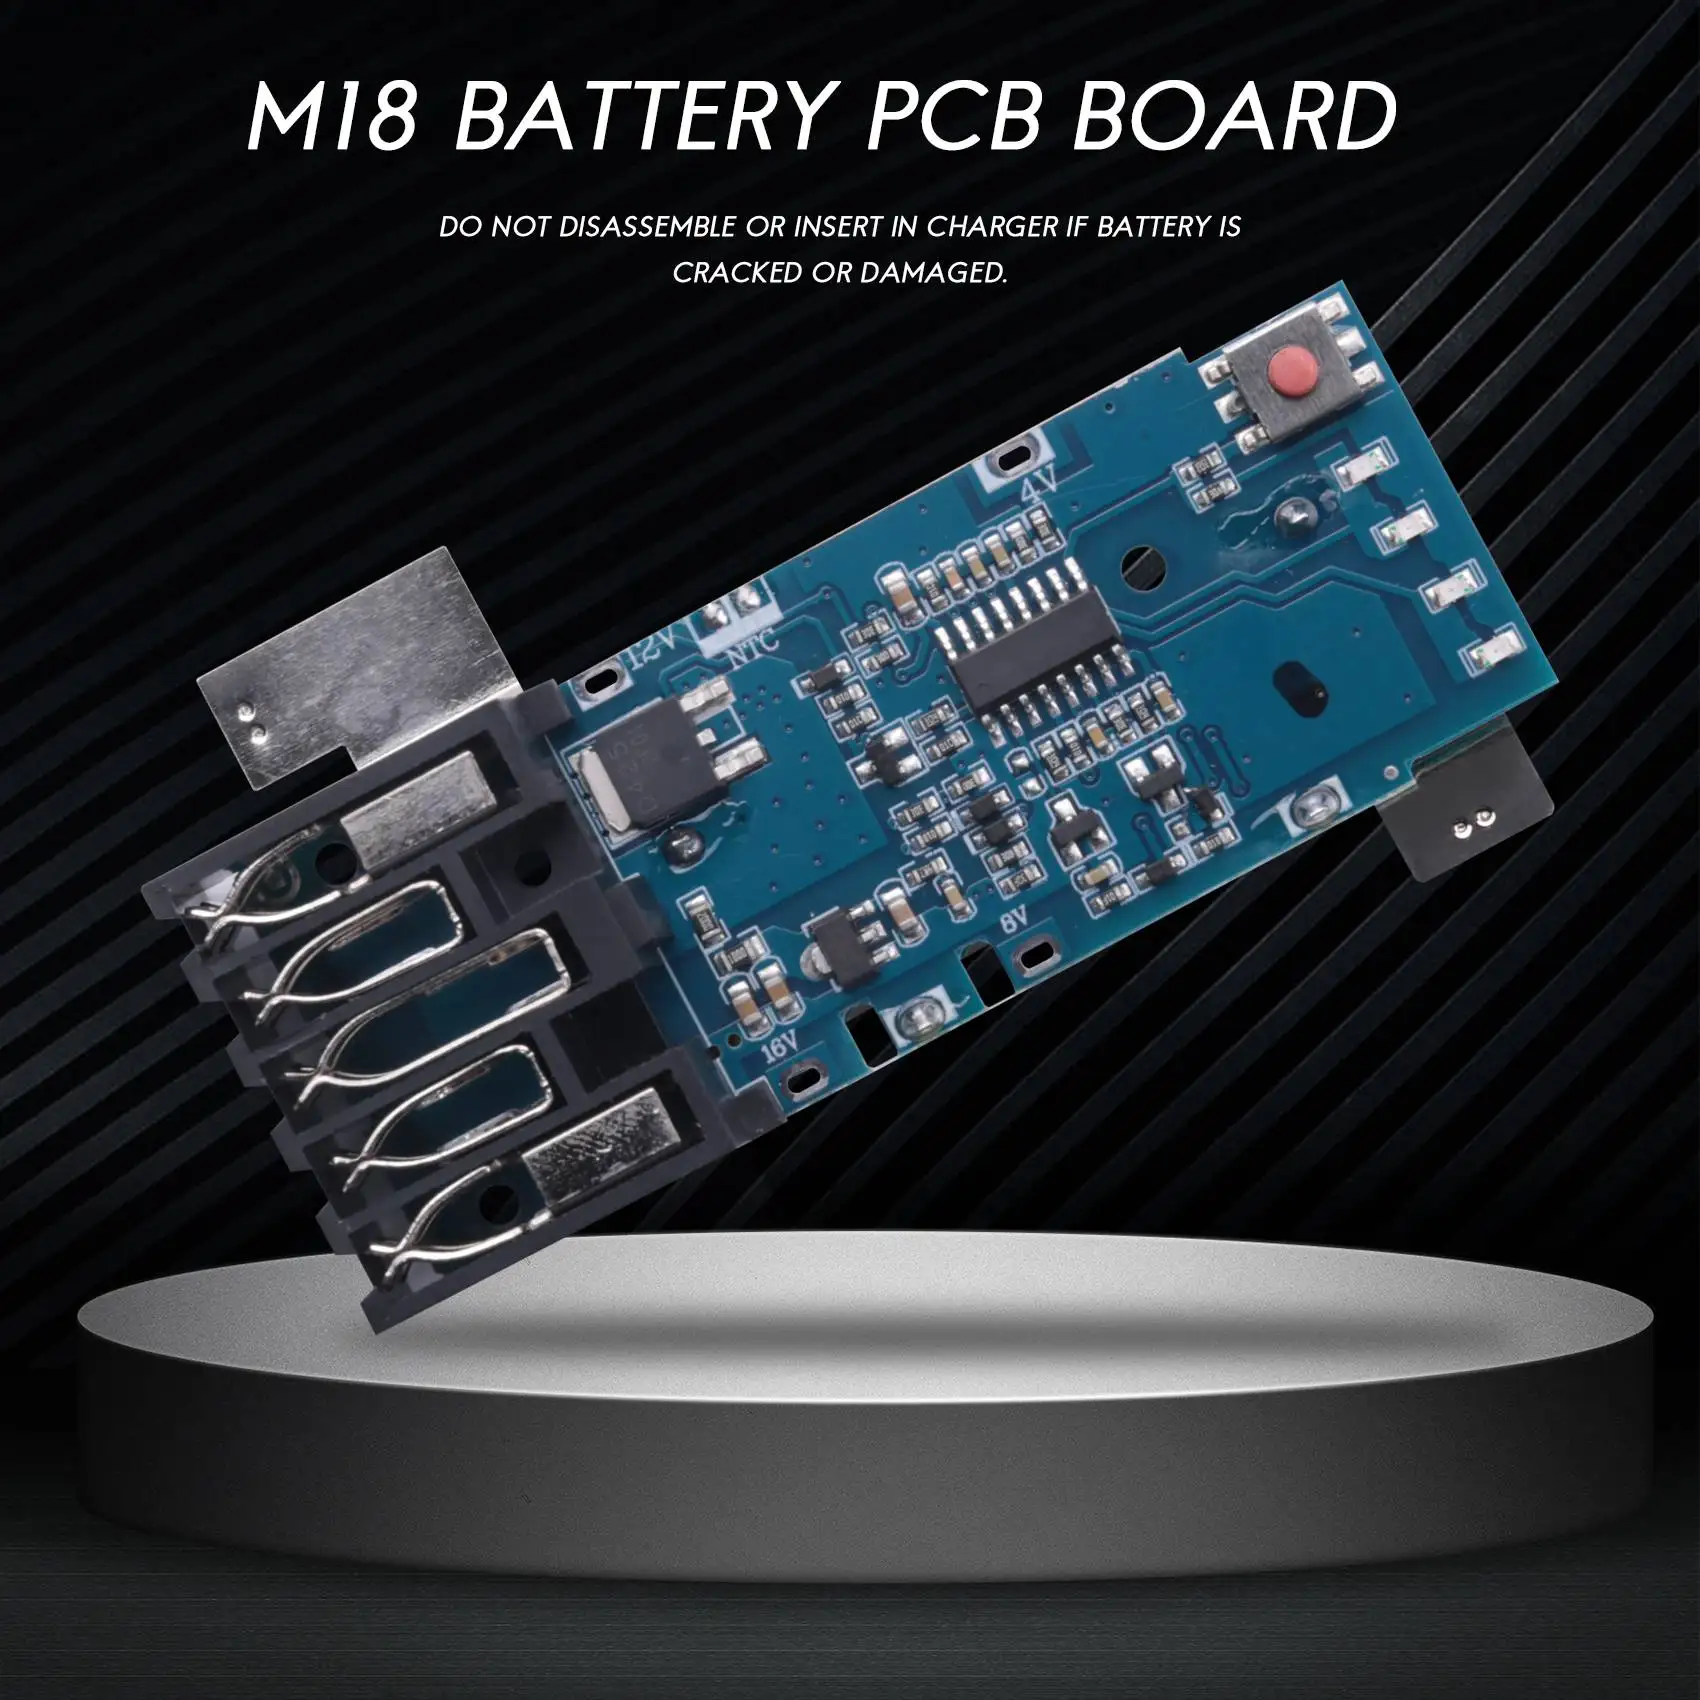 Batéria M18 PCB Dosky Nabíjania Ochrana Doska pre 48-11-1815 M18 18V 1.5 Ah 3.0 AH 5Ah 6Ah